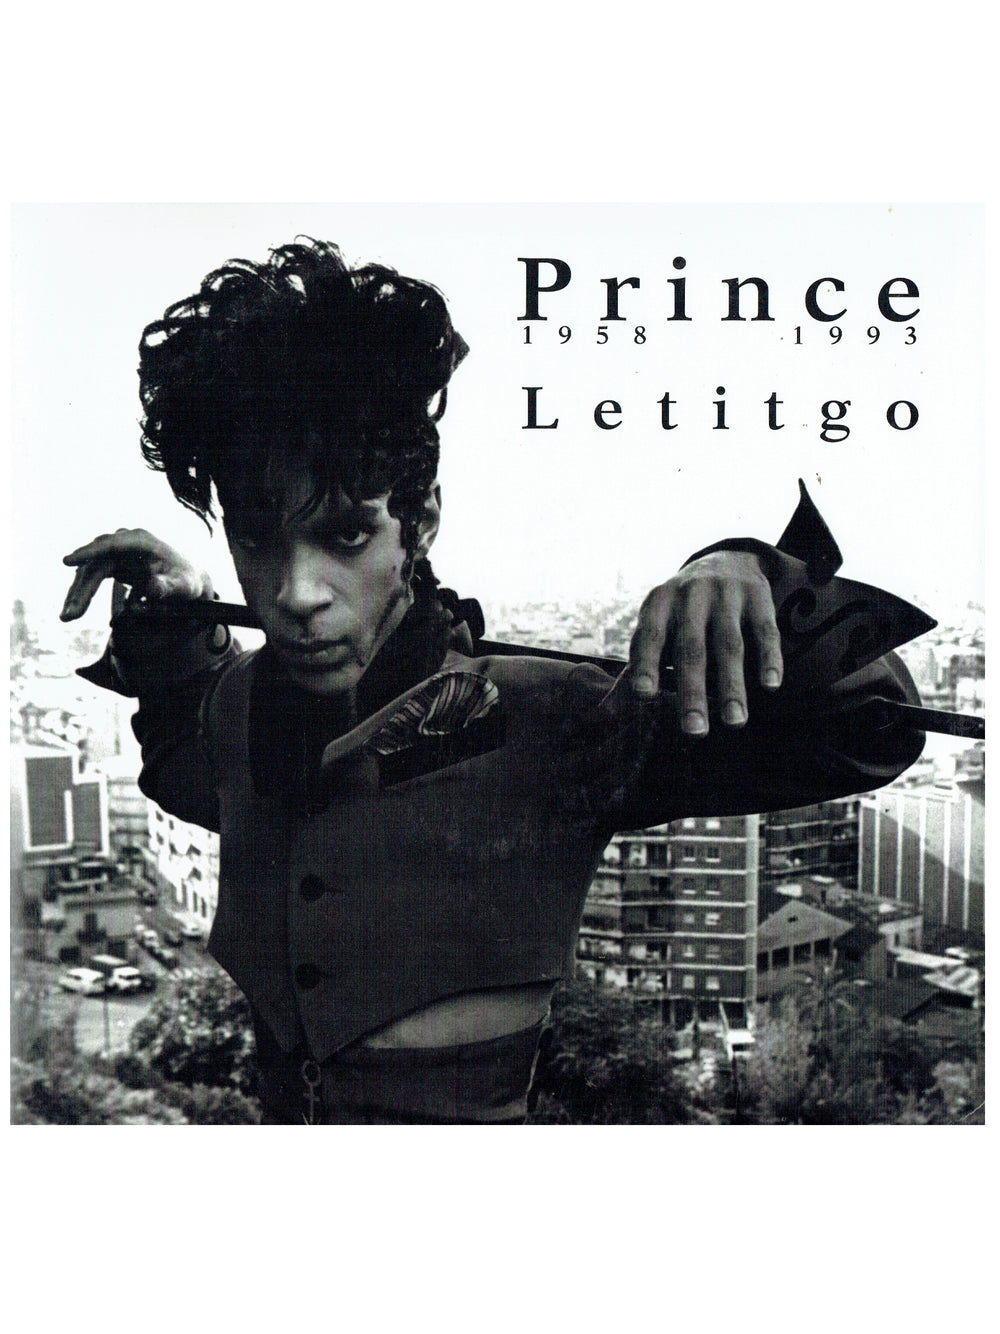 Prince – 1958 - 1993 Letitgo 12 Inch Vinyl Single USA Release 8 Tracks Gold Stamped EX